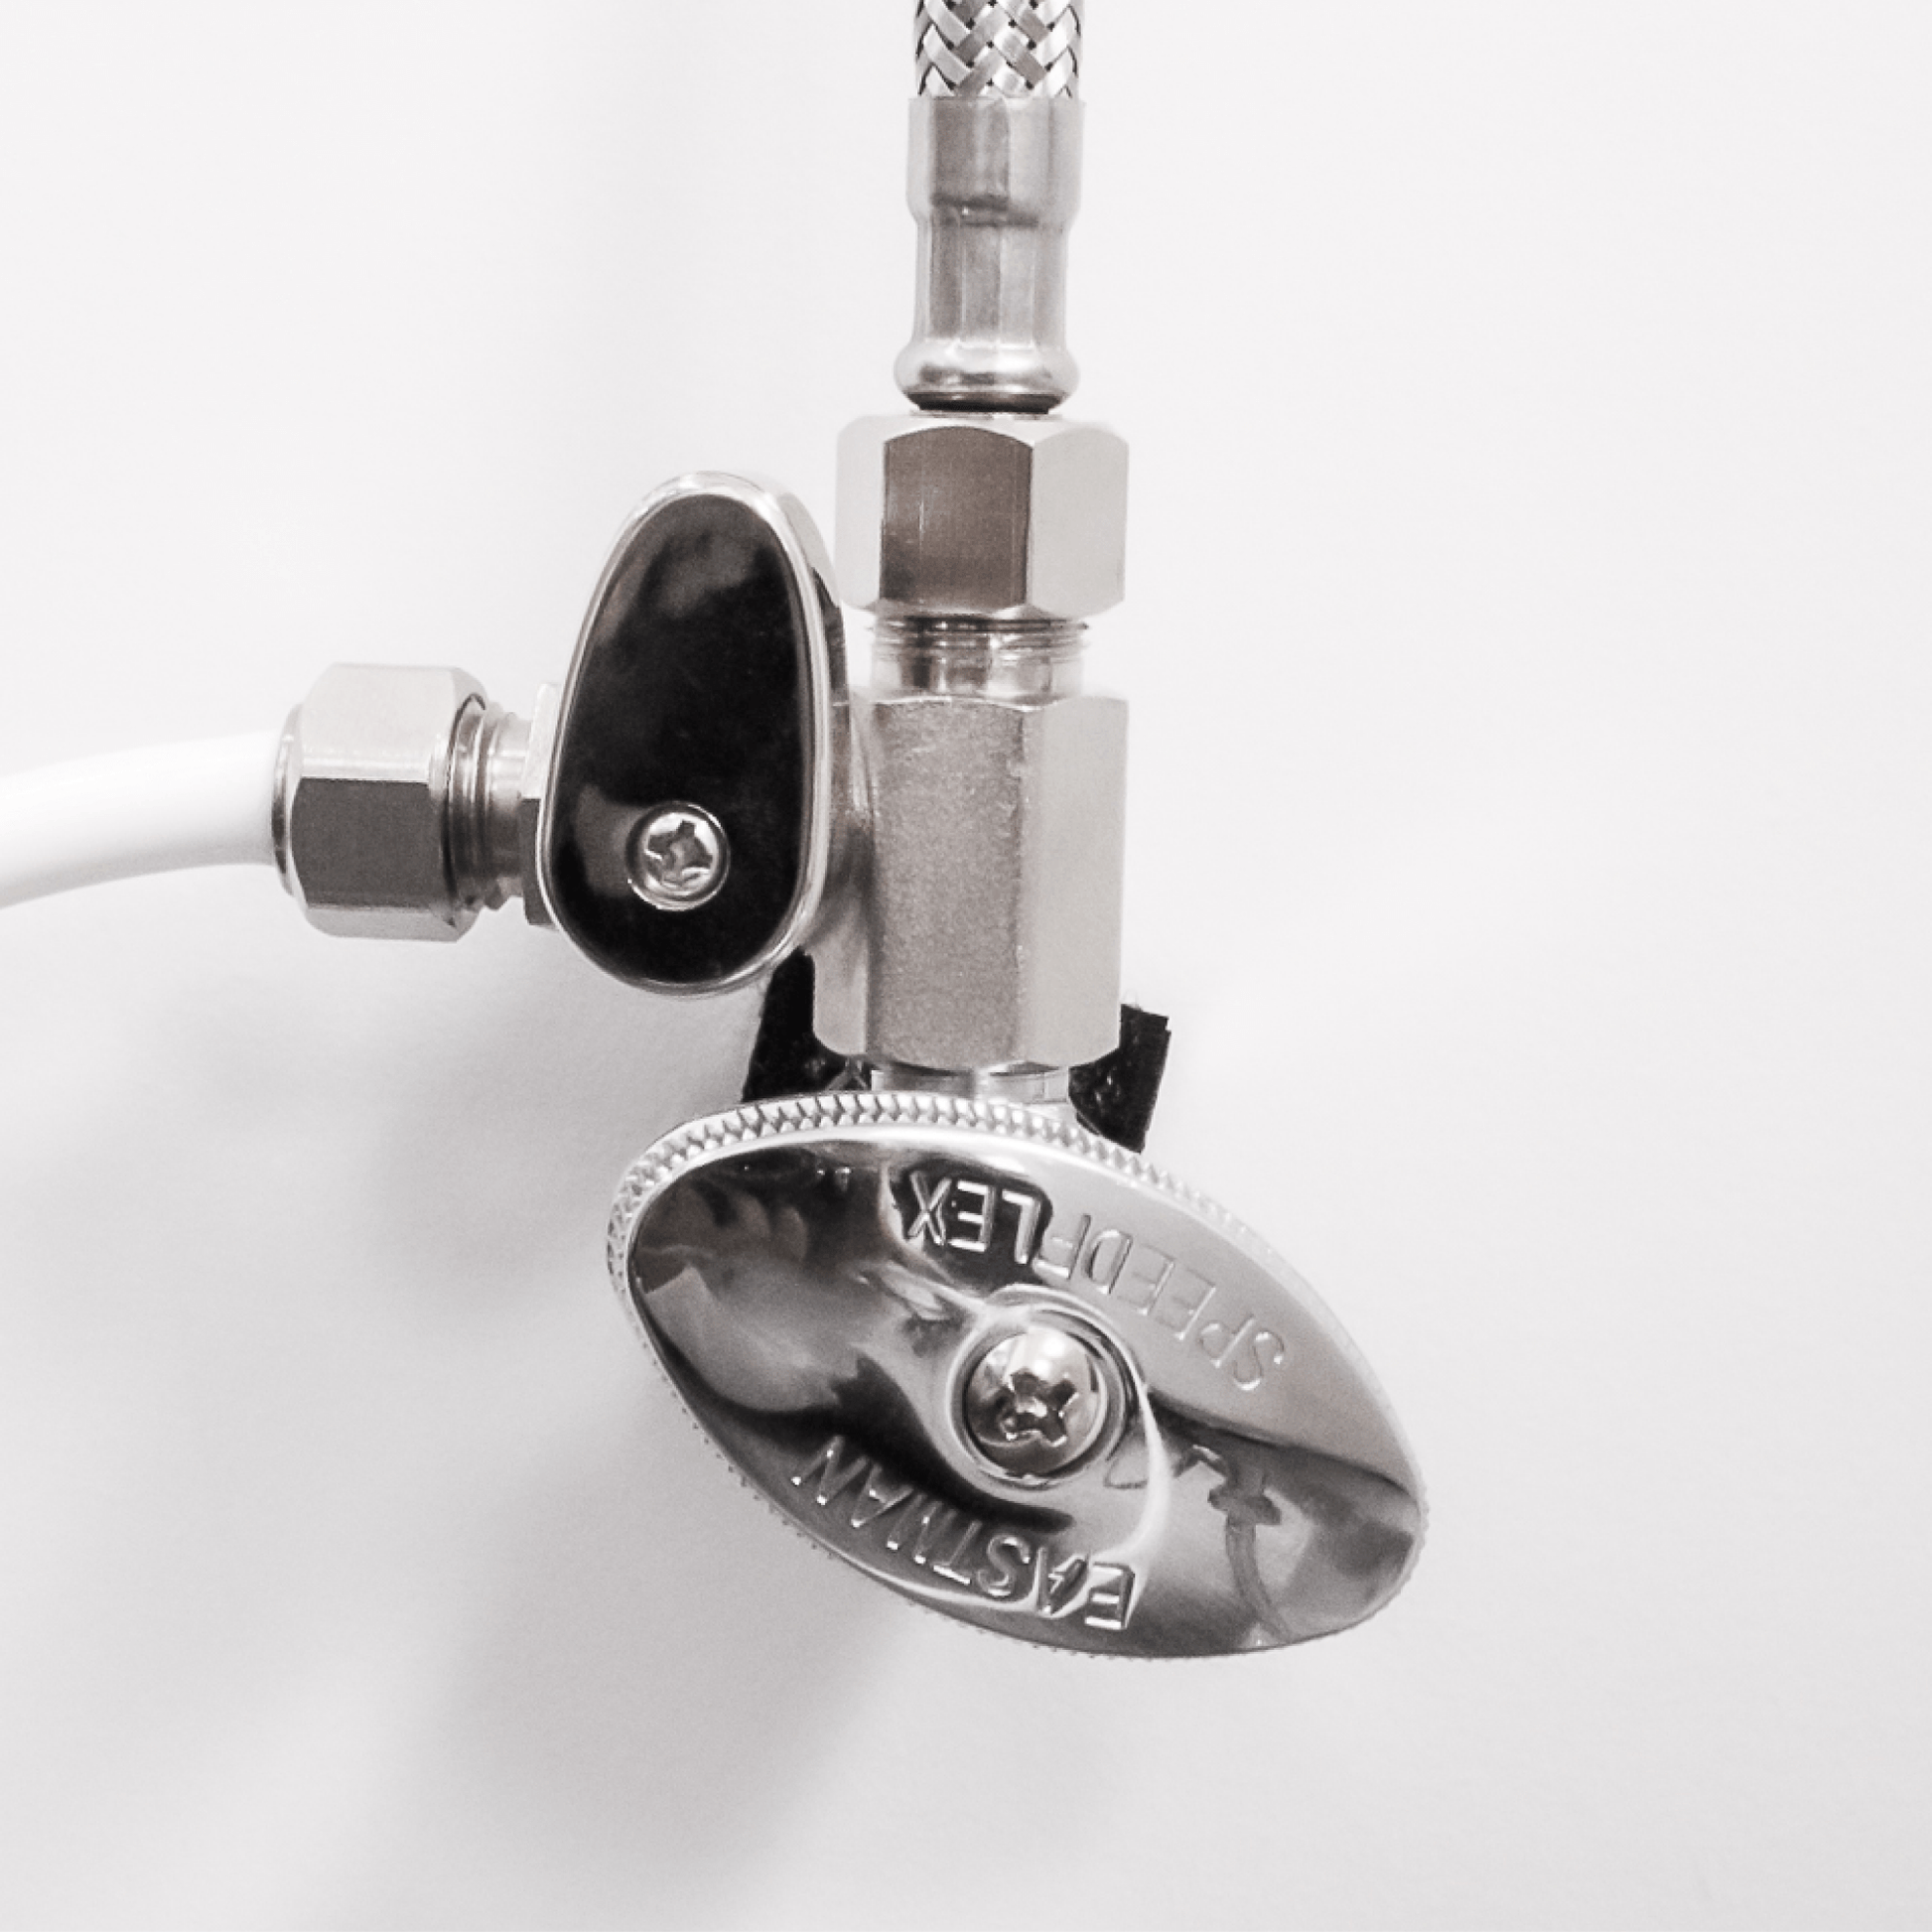 Hot Water Teardrop Nickel Shut-Off T-Adapter at sink supply valve, in off position